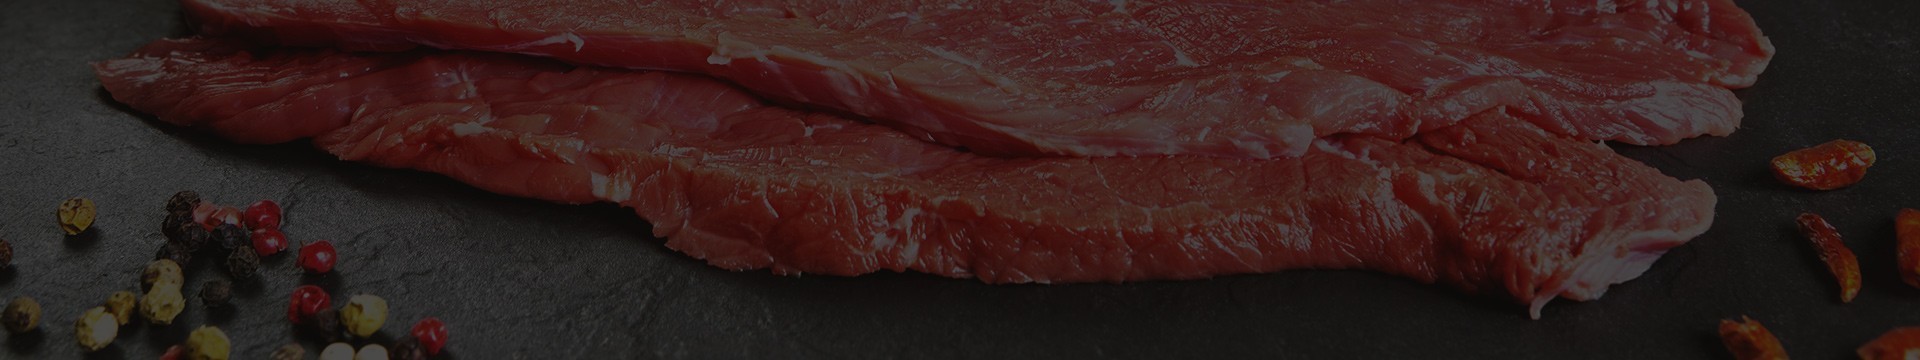 Carne Gallega a Domicilio | Carne para Barbacoa